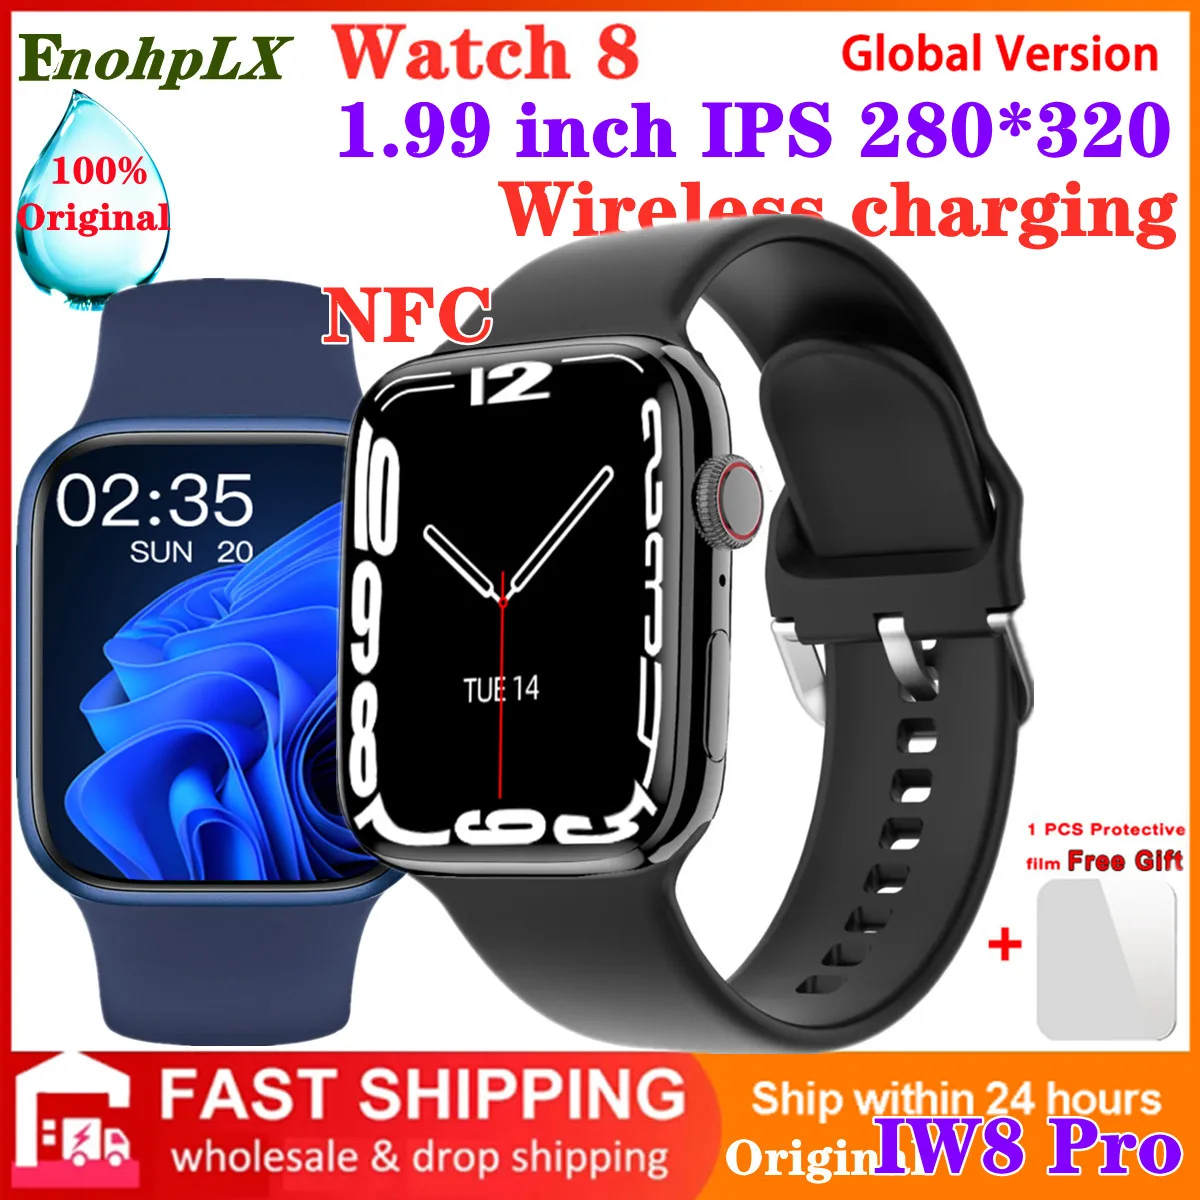 

Original 5PCS IW8 PRO 45mm 1.99 inch Smart Watch Series 8 NFC Wireless Charging Sport Smartwatch PK W27 W38 W28 X8 Pro Max